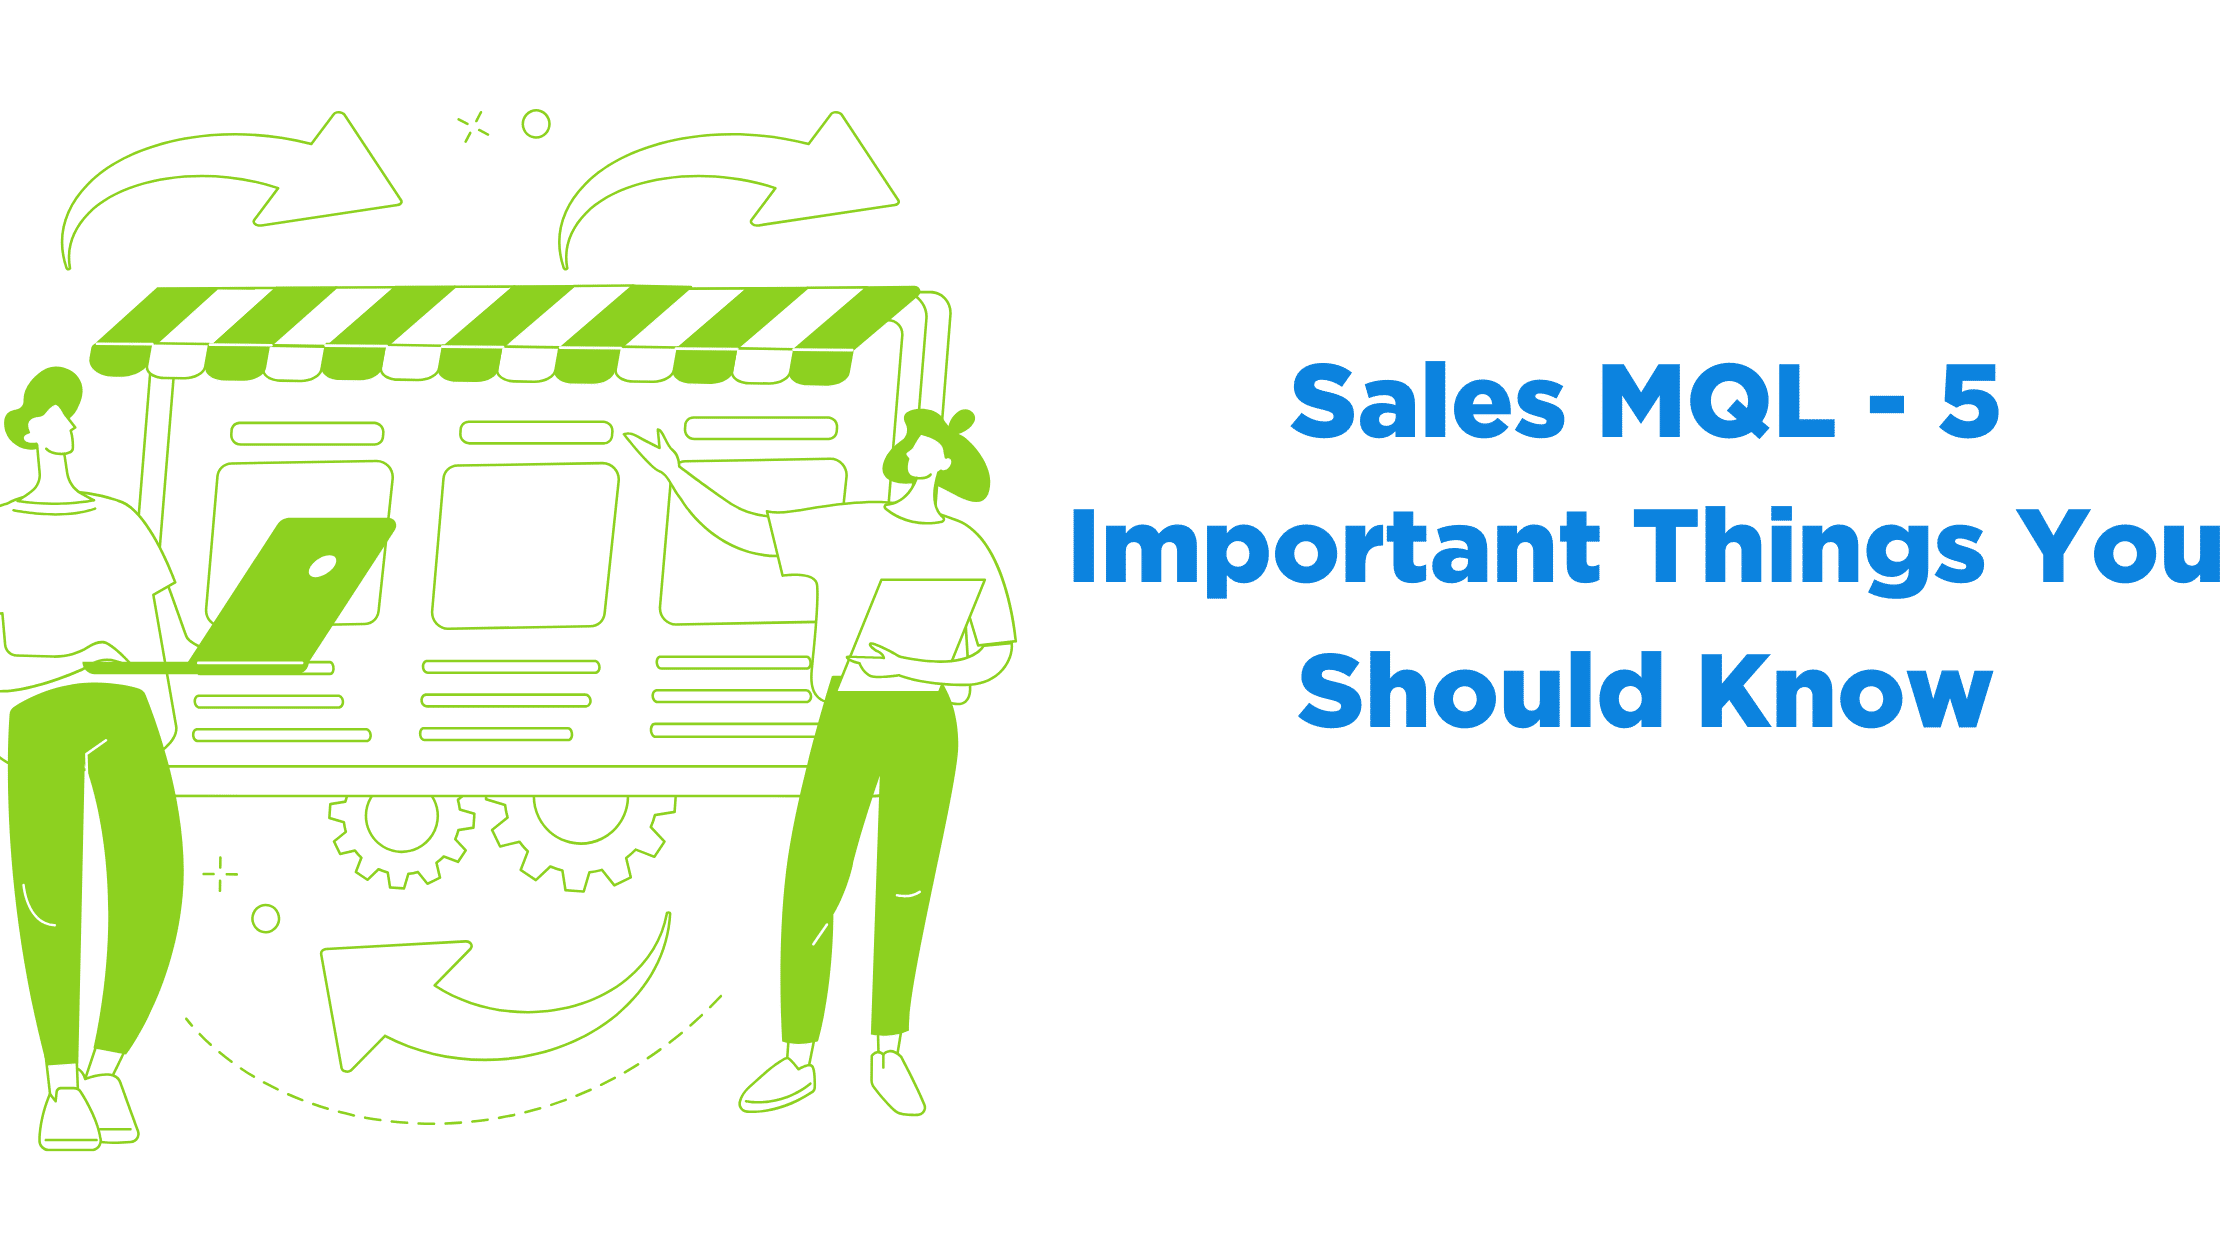 Sales MQL - 5 Effective Ways to Identify